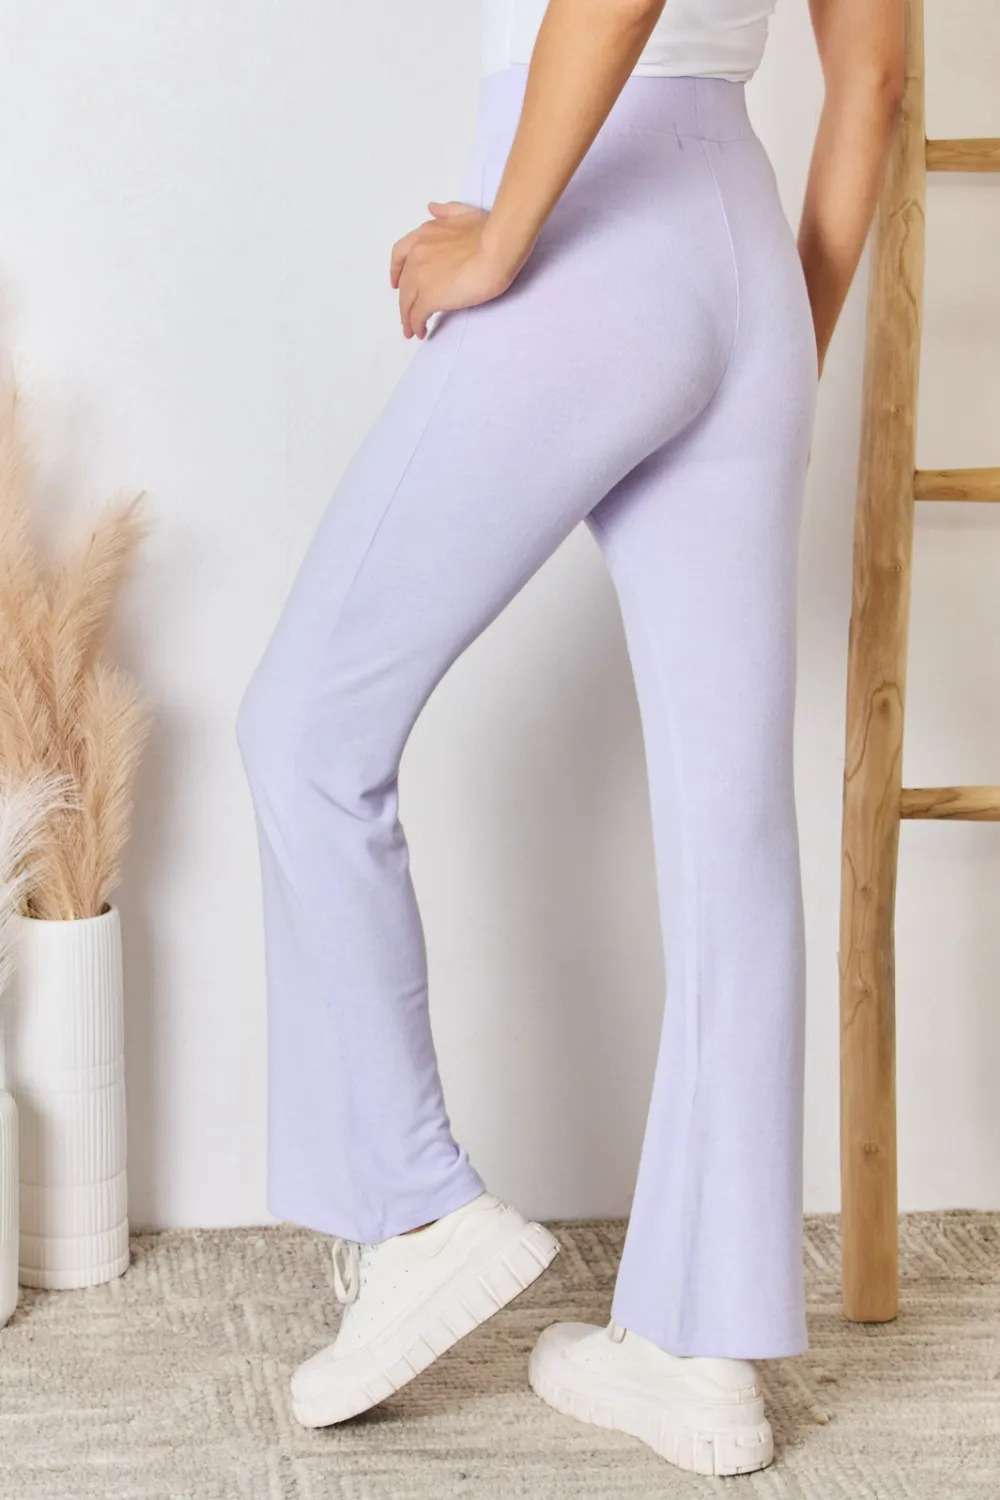 Full Size High Waist Ultra Soft Knit Flare Pants On Sale - Risen - Daily Fashion